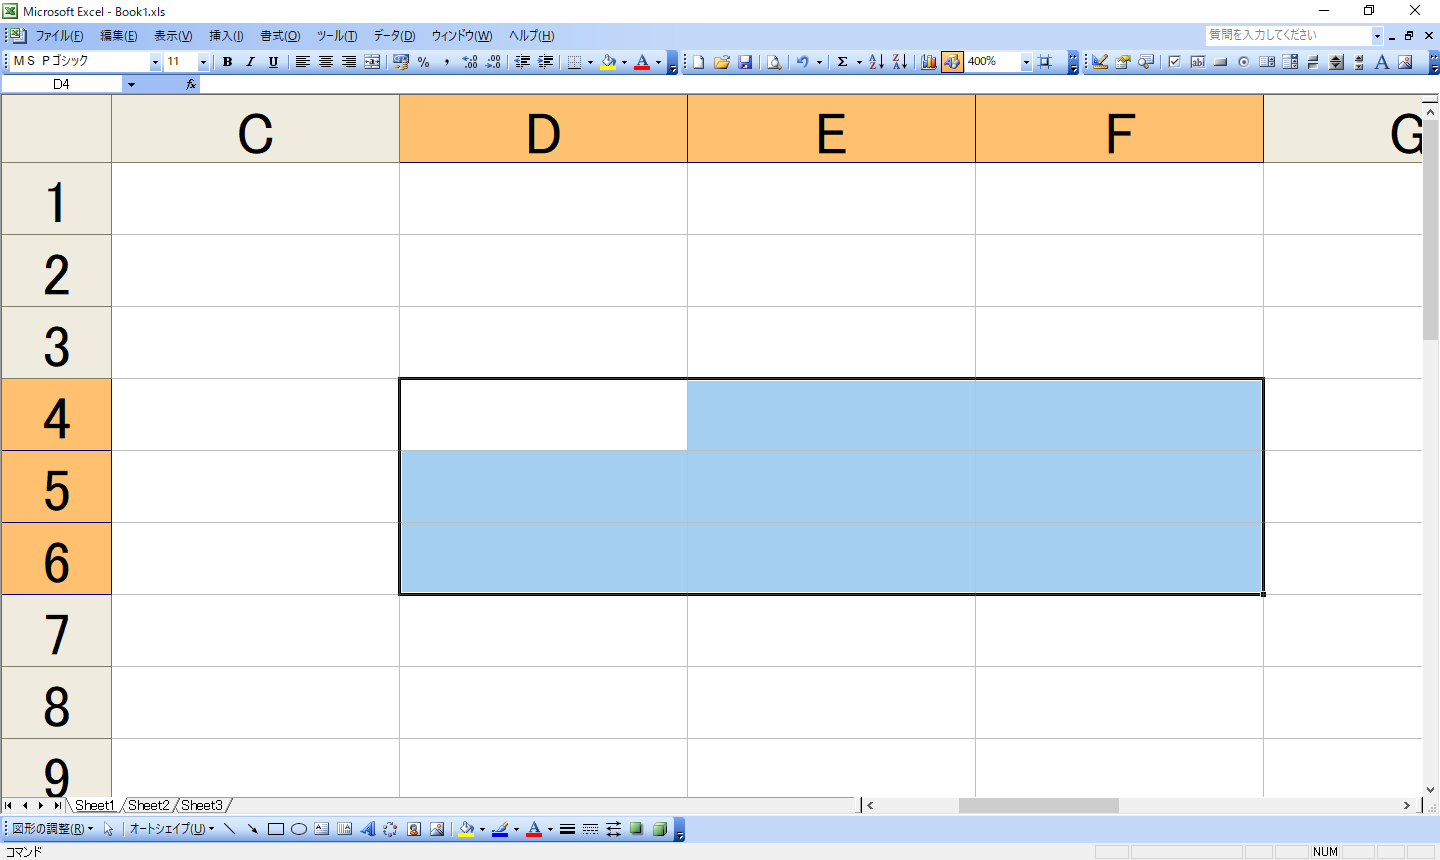 「Excel メニュー > 表示 > ズーム > 選択範囲をズーム」の実行結果です。